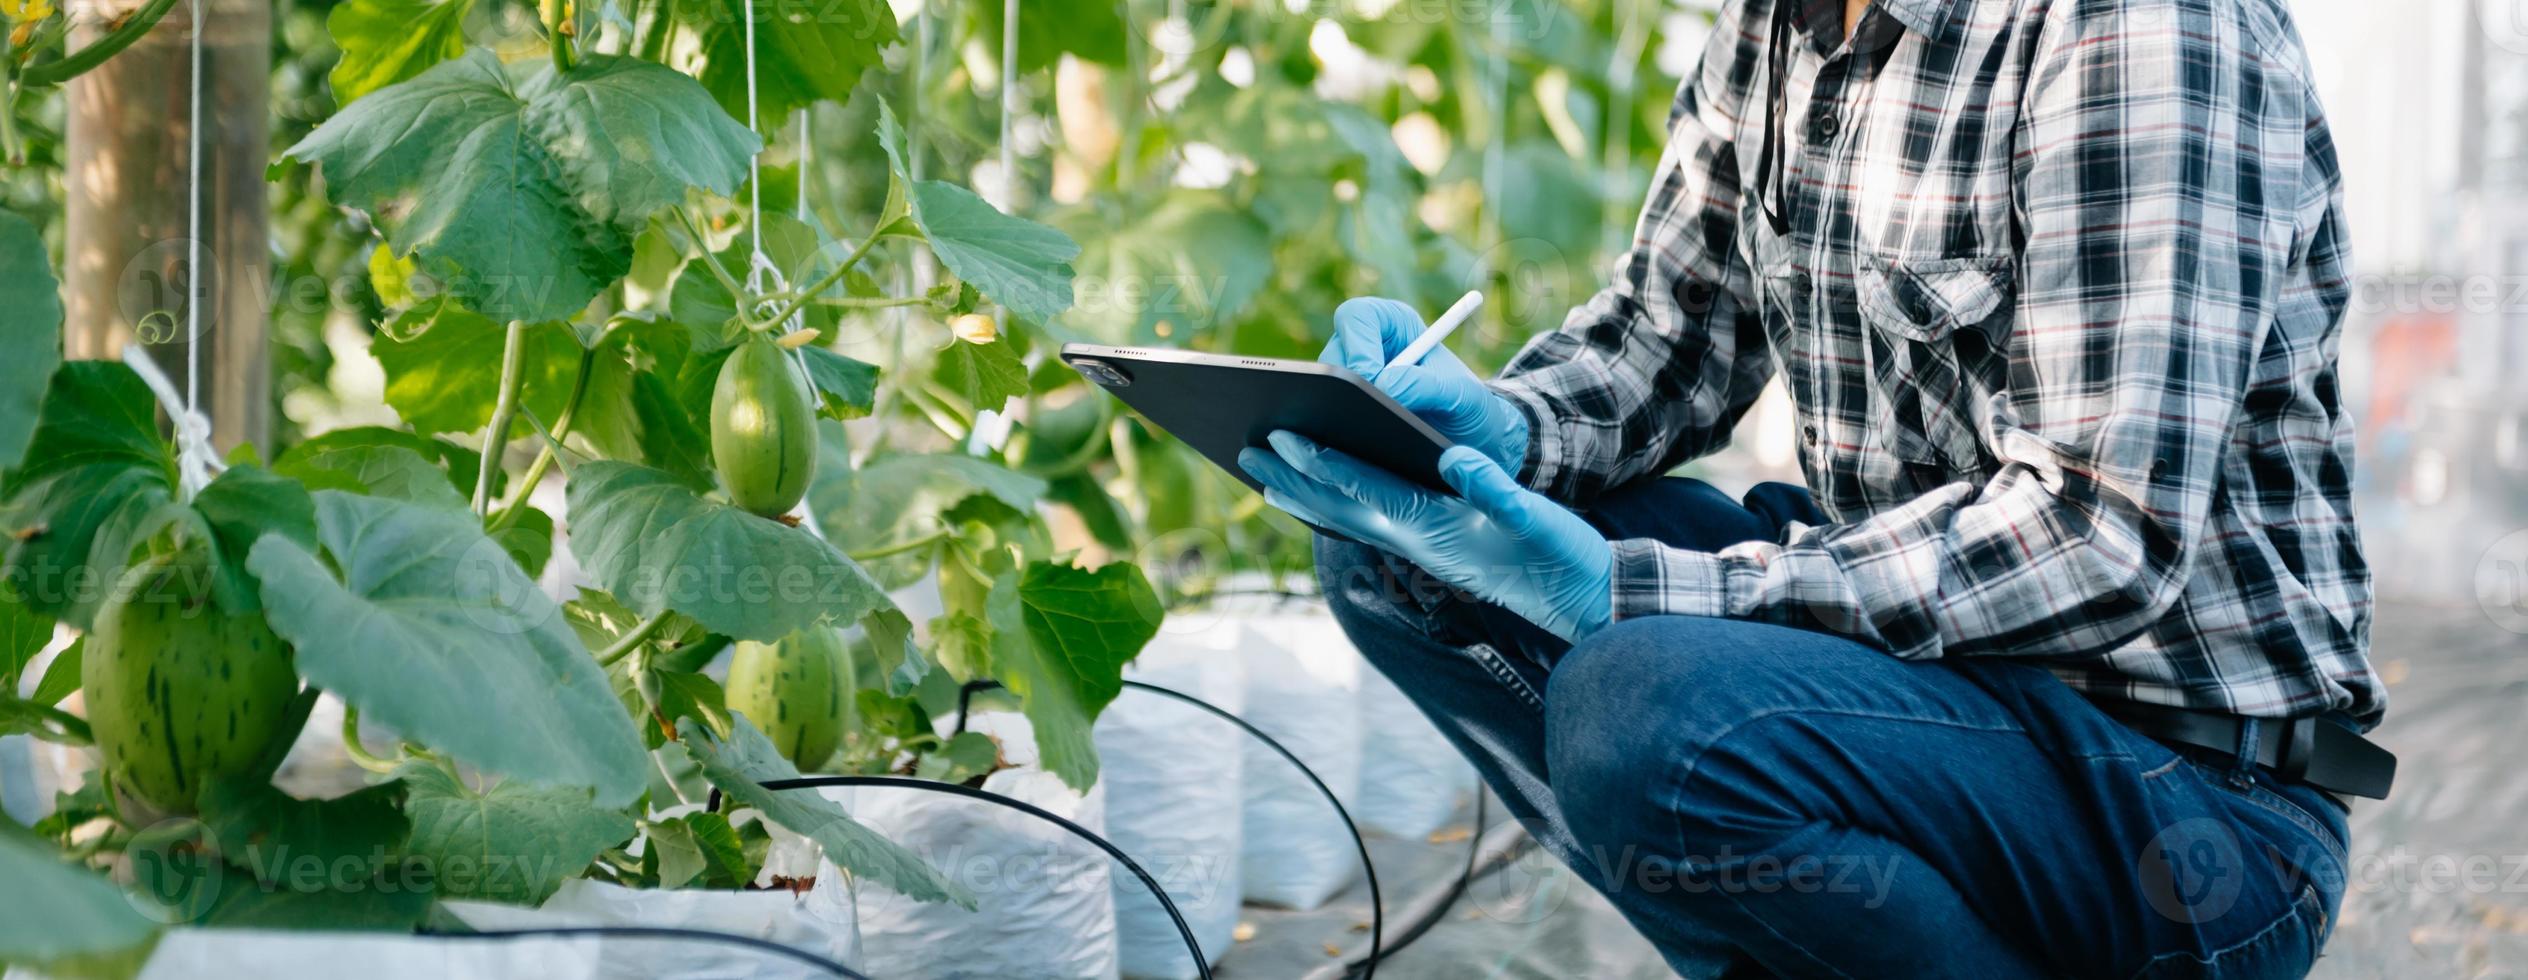 farmer woman watching organic tomatoes using digital tablet in greenhouse, Farmers working in smart farming photo